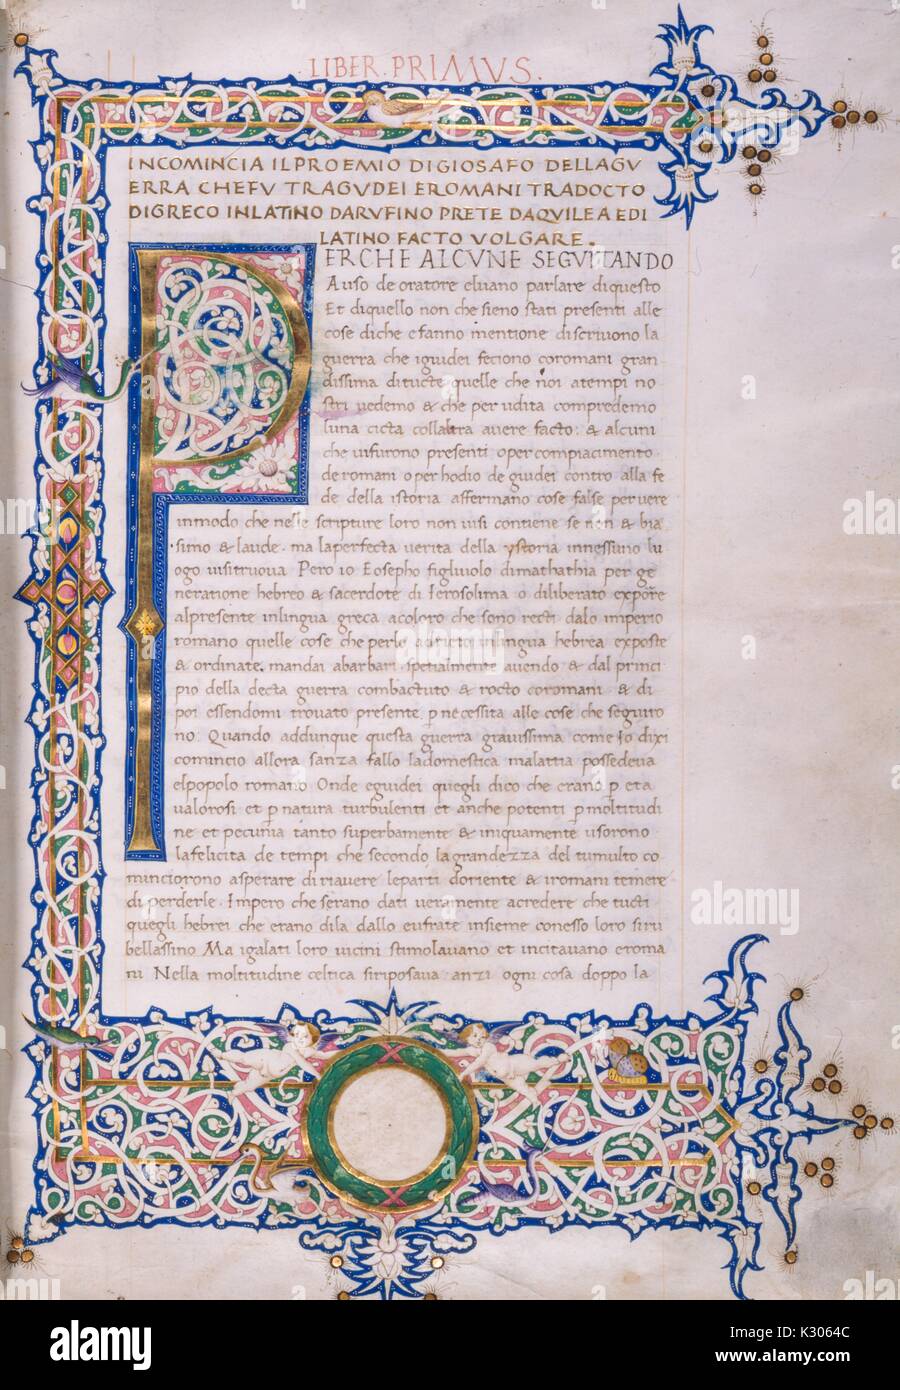 Manuscrit enluminé de la page 'Incomincia il proemio di giosafo tragudei chefu della guerra e romani, ' livre d'heures imprimé en italien en 15e siècle, 1400. Banque D'Images